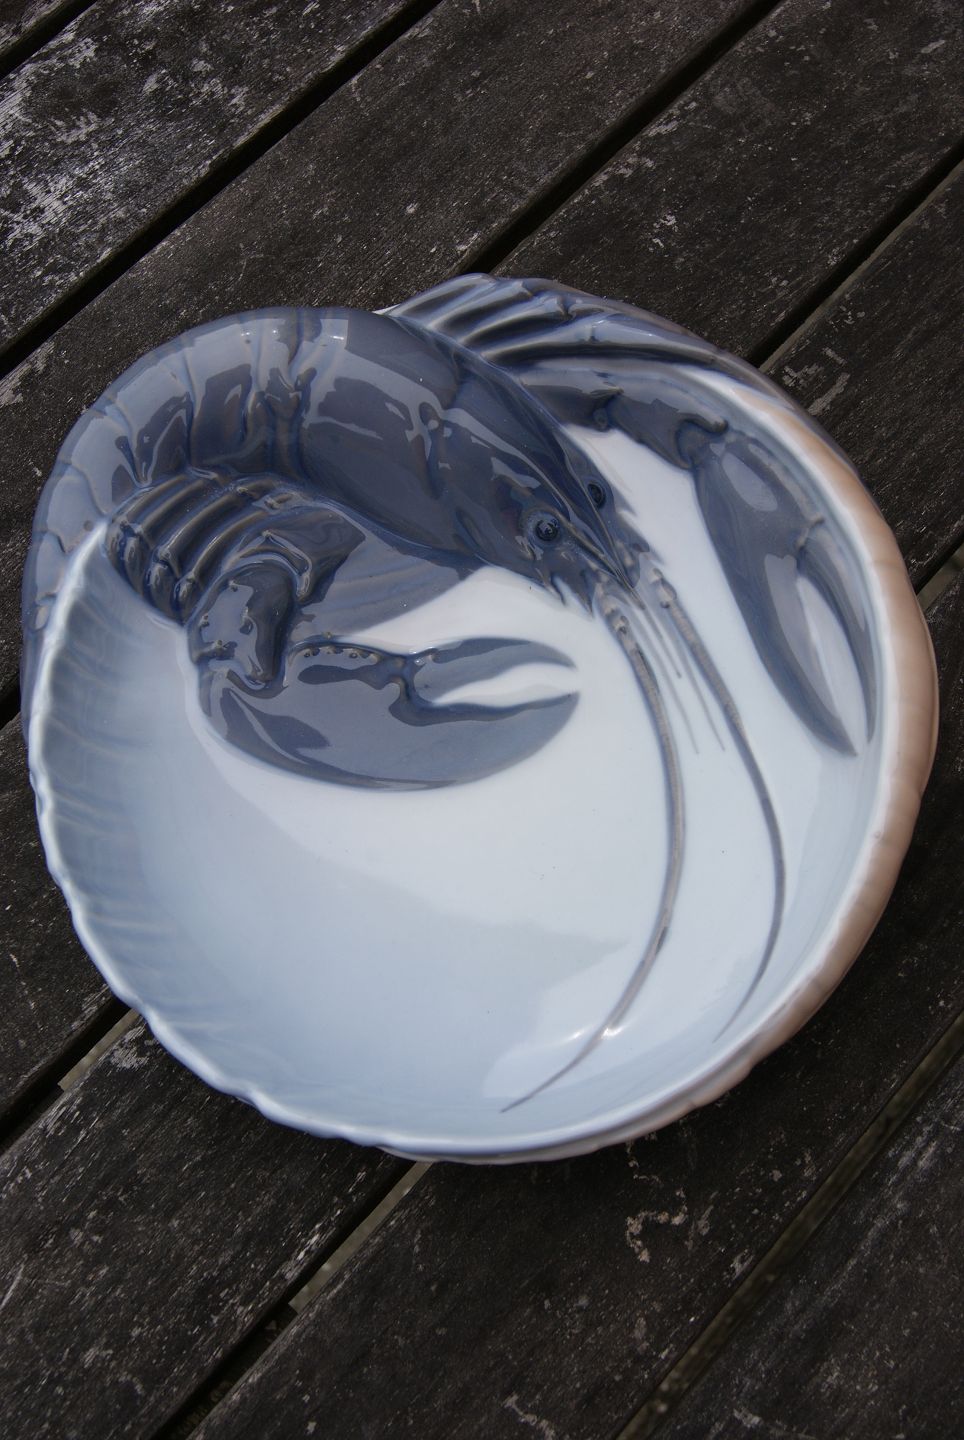 WorldAntique.net - Porcelain bowl with lobster by Royal Copenhagen, Denmark